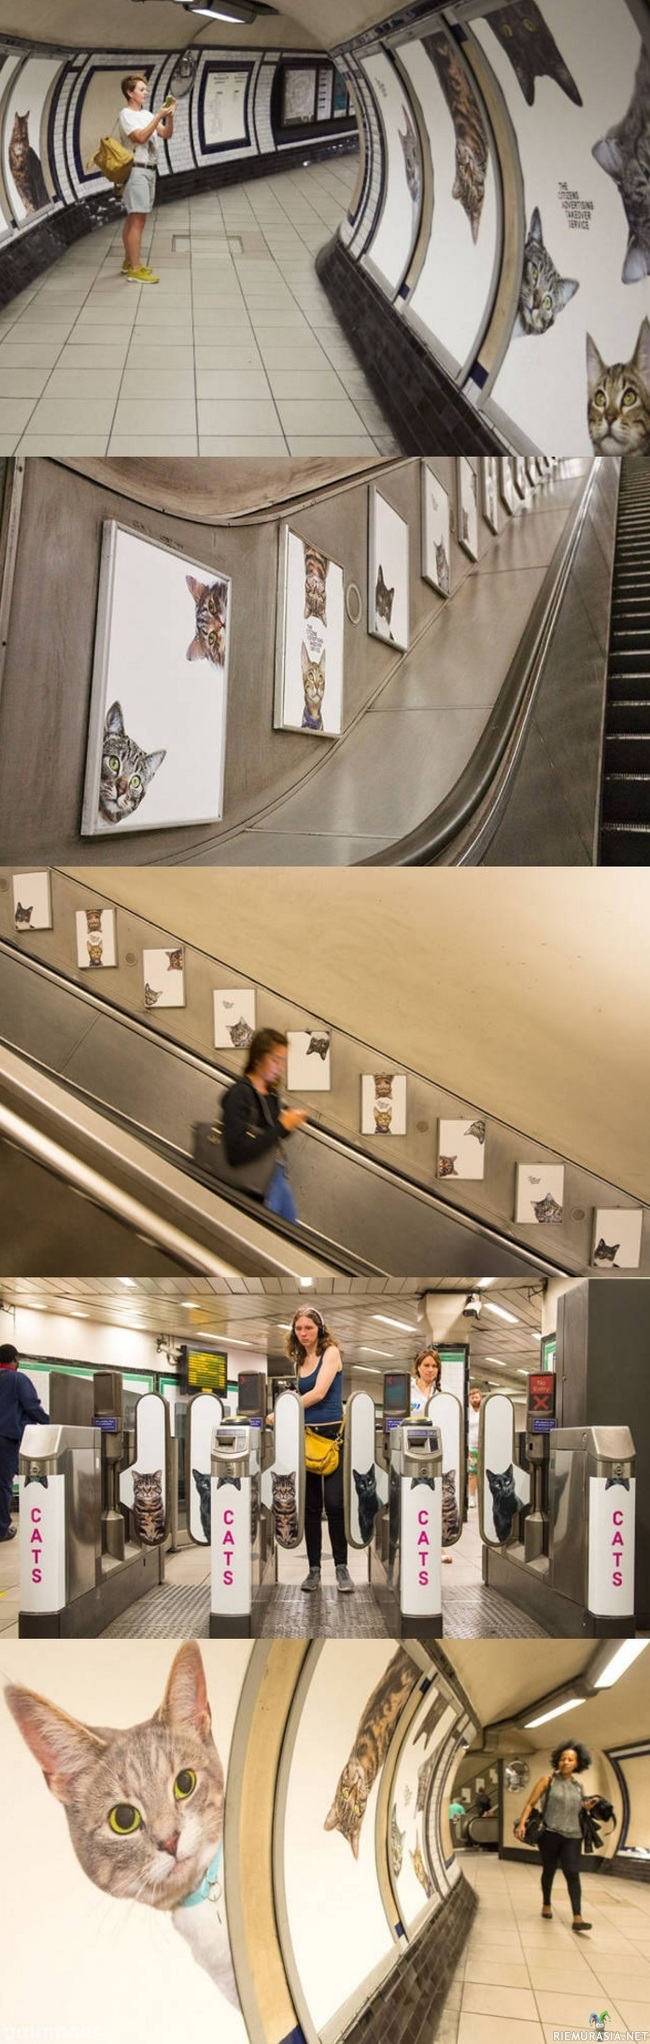 Kissametro - Lontoon metrossa kampanja nimeltä Citizens Advertising Takeover Service